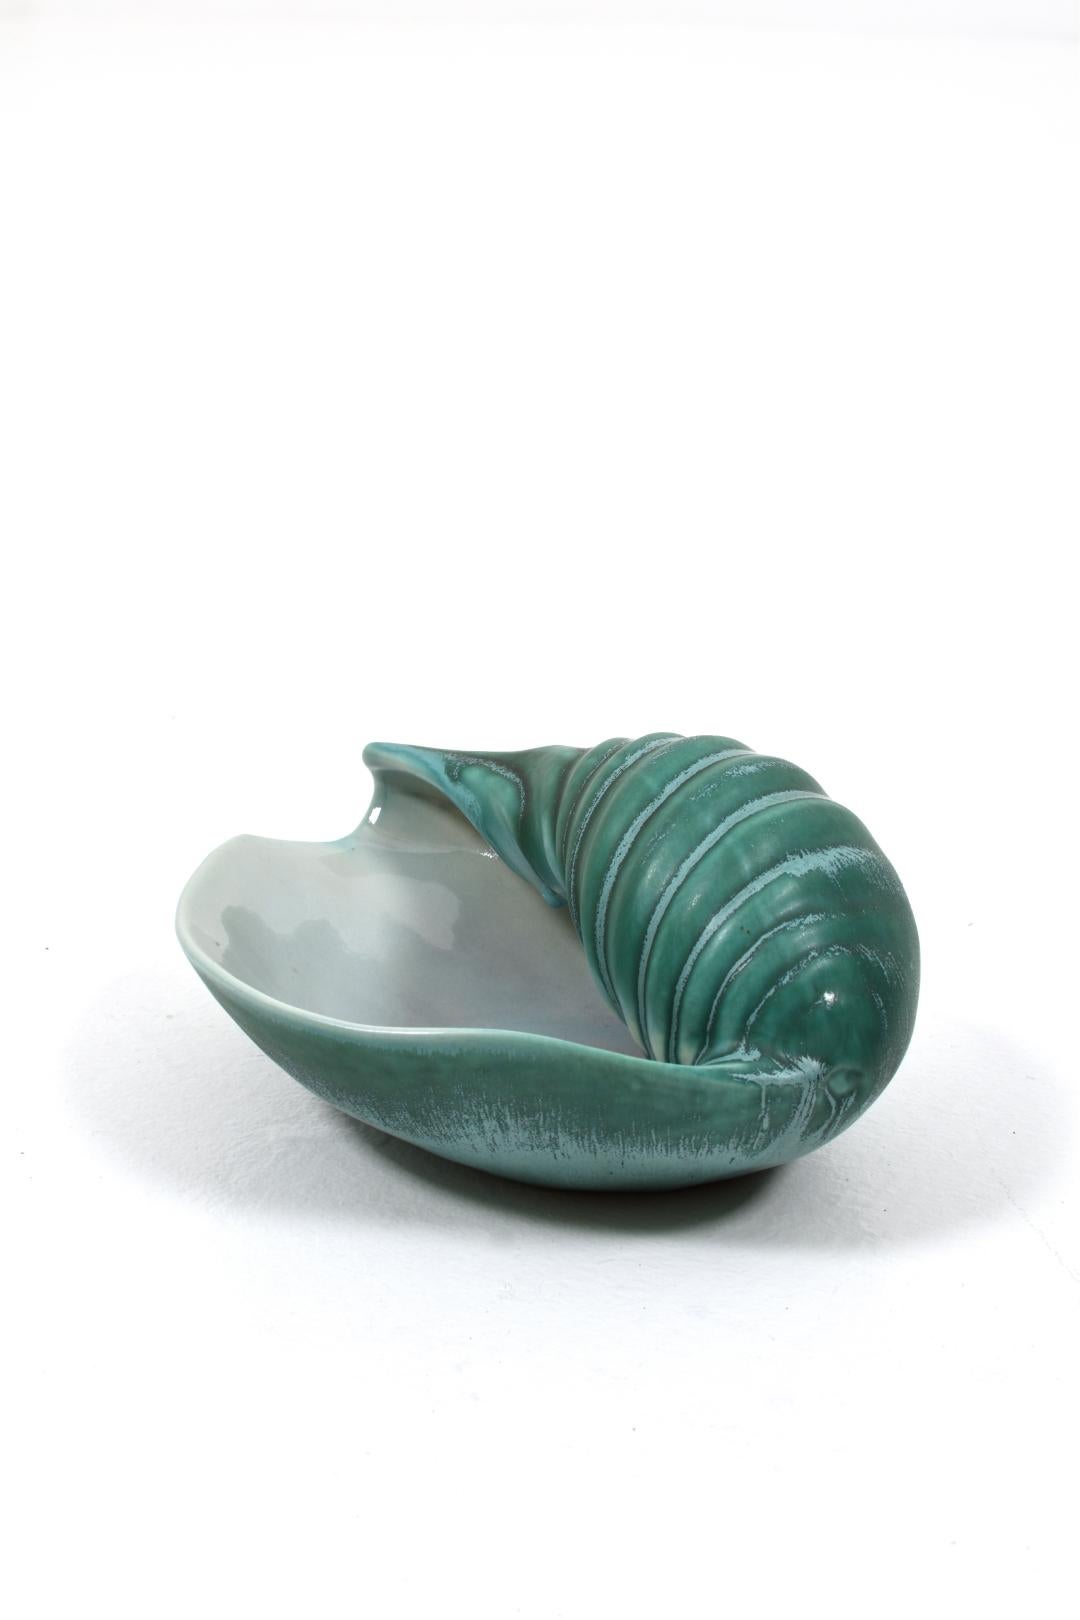 Ceramic Seashell Bowl by Ewald Dahlskog for Bo Fajans, 1939 In Good Condition For Sale In Göteborg, SE